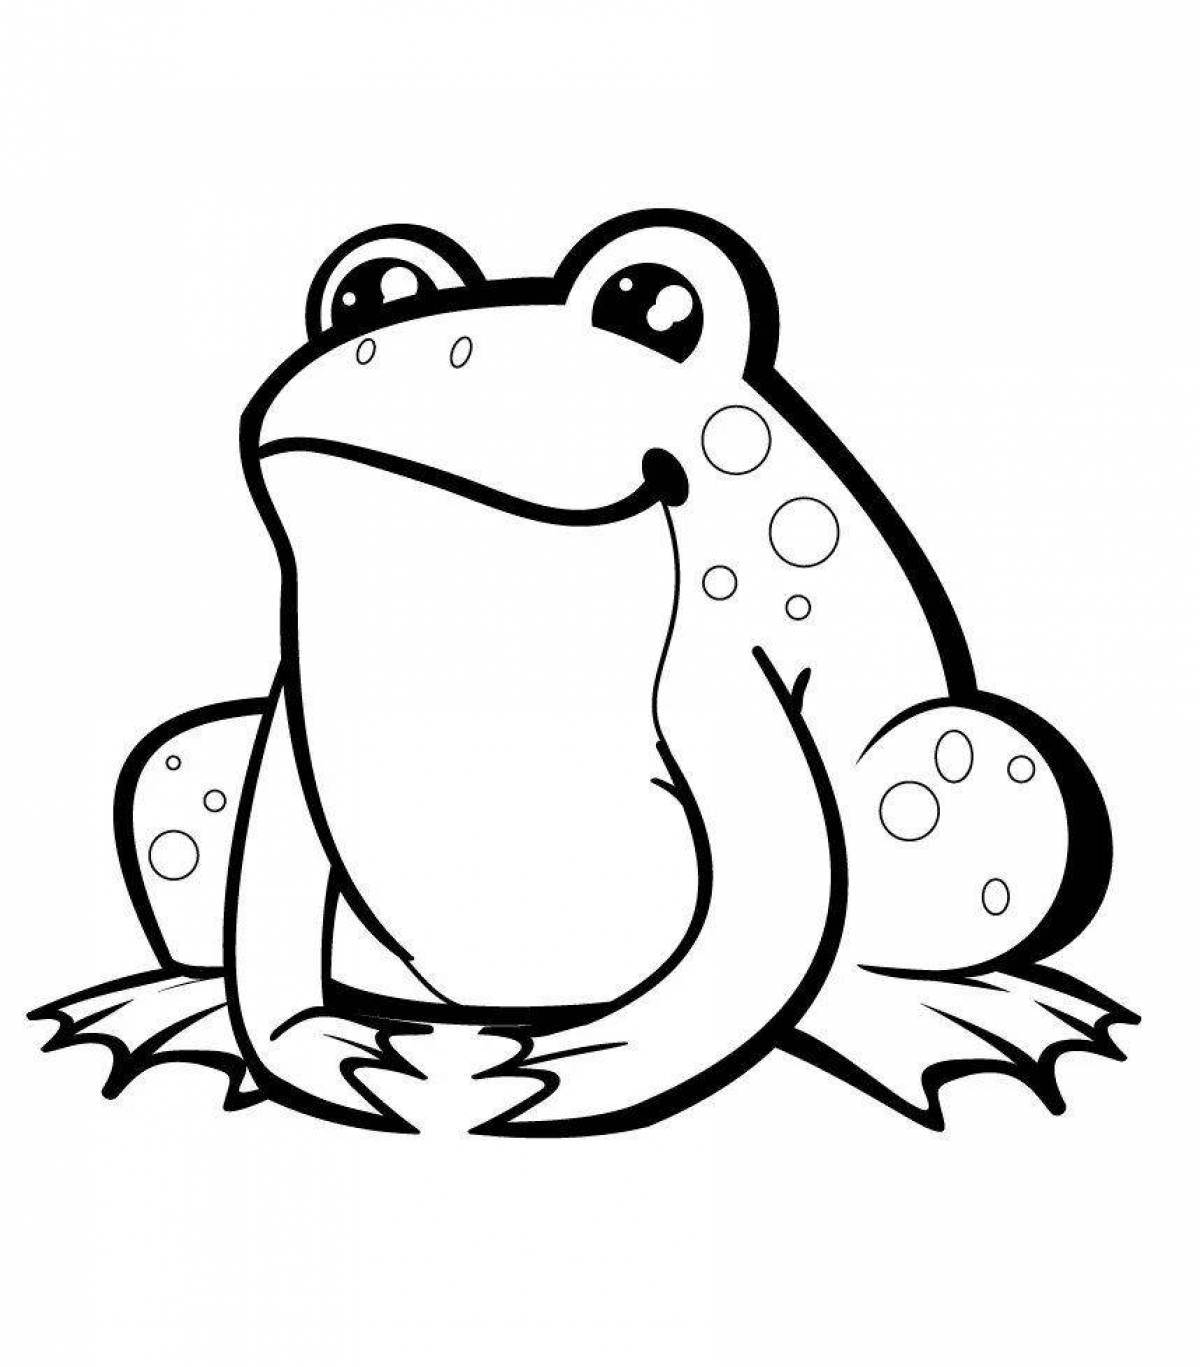 Яркая страница раскраски рисунка лягушки